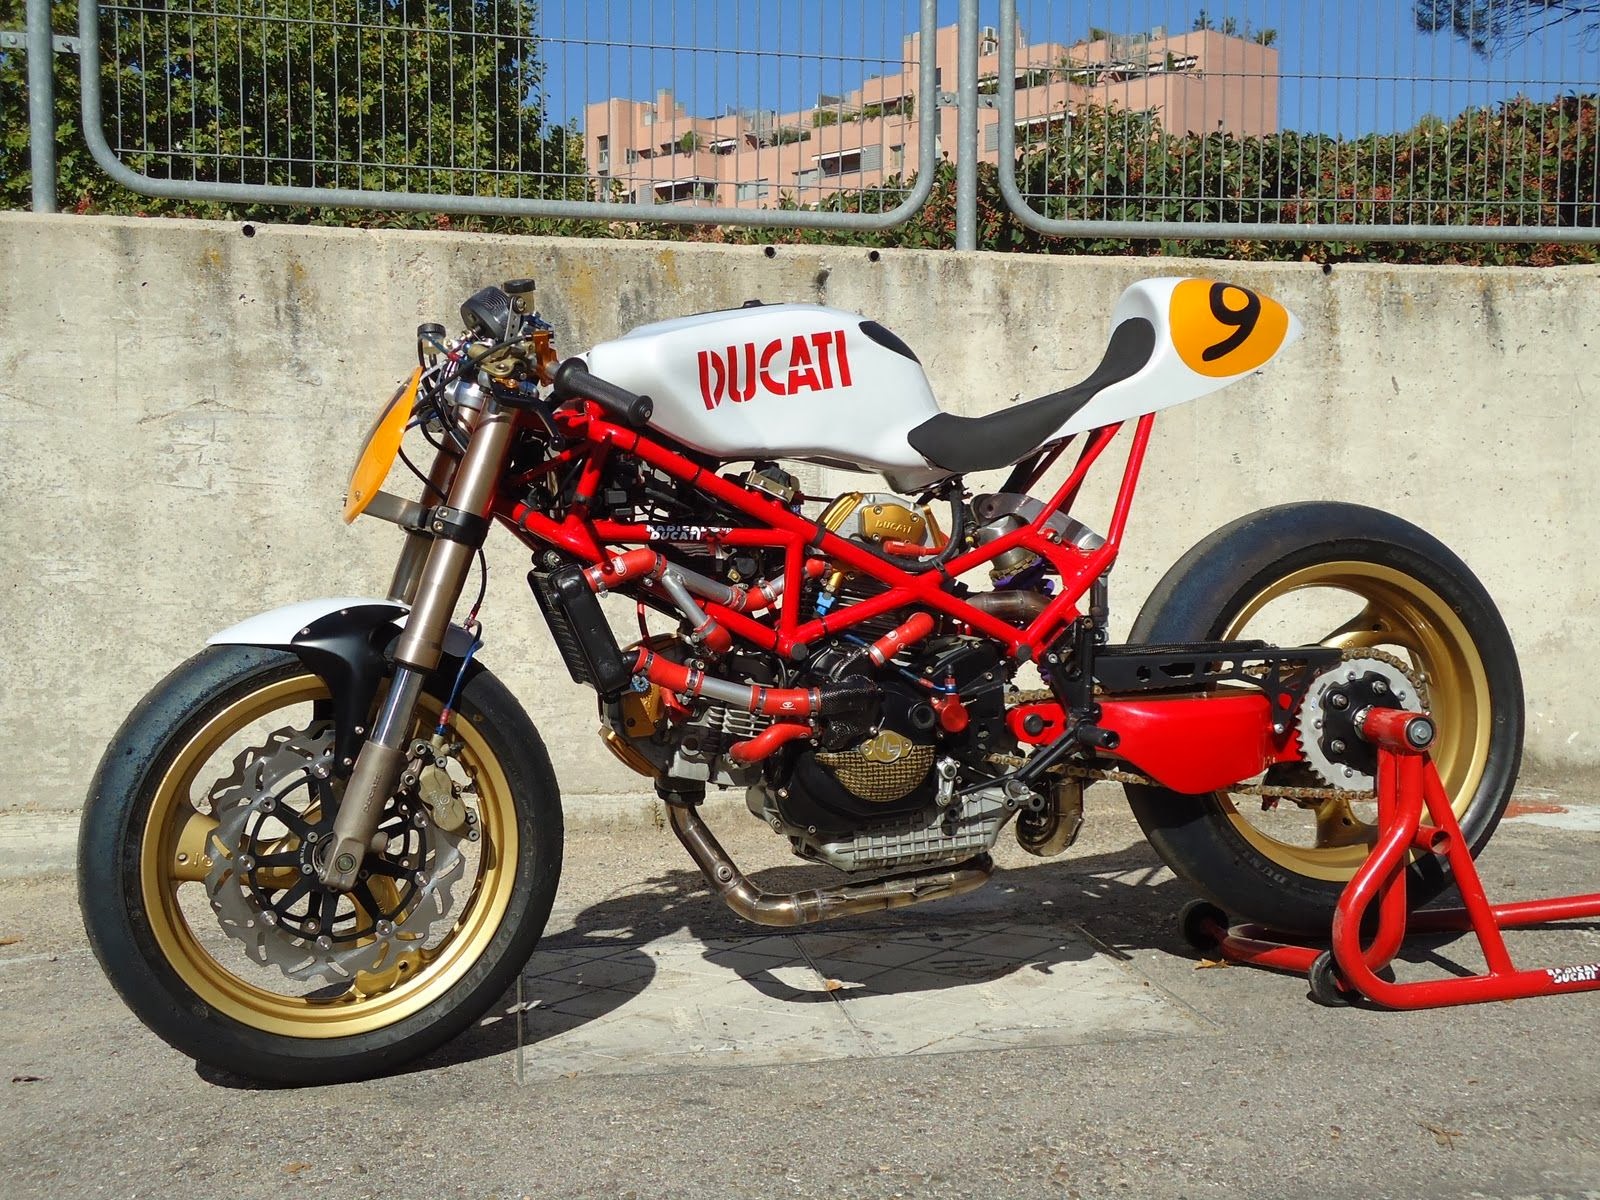 Modifikasi Motor Ducati Foto Baru Unik Modifmotif